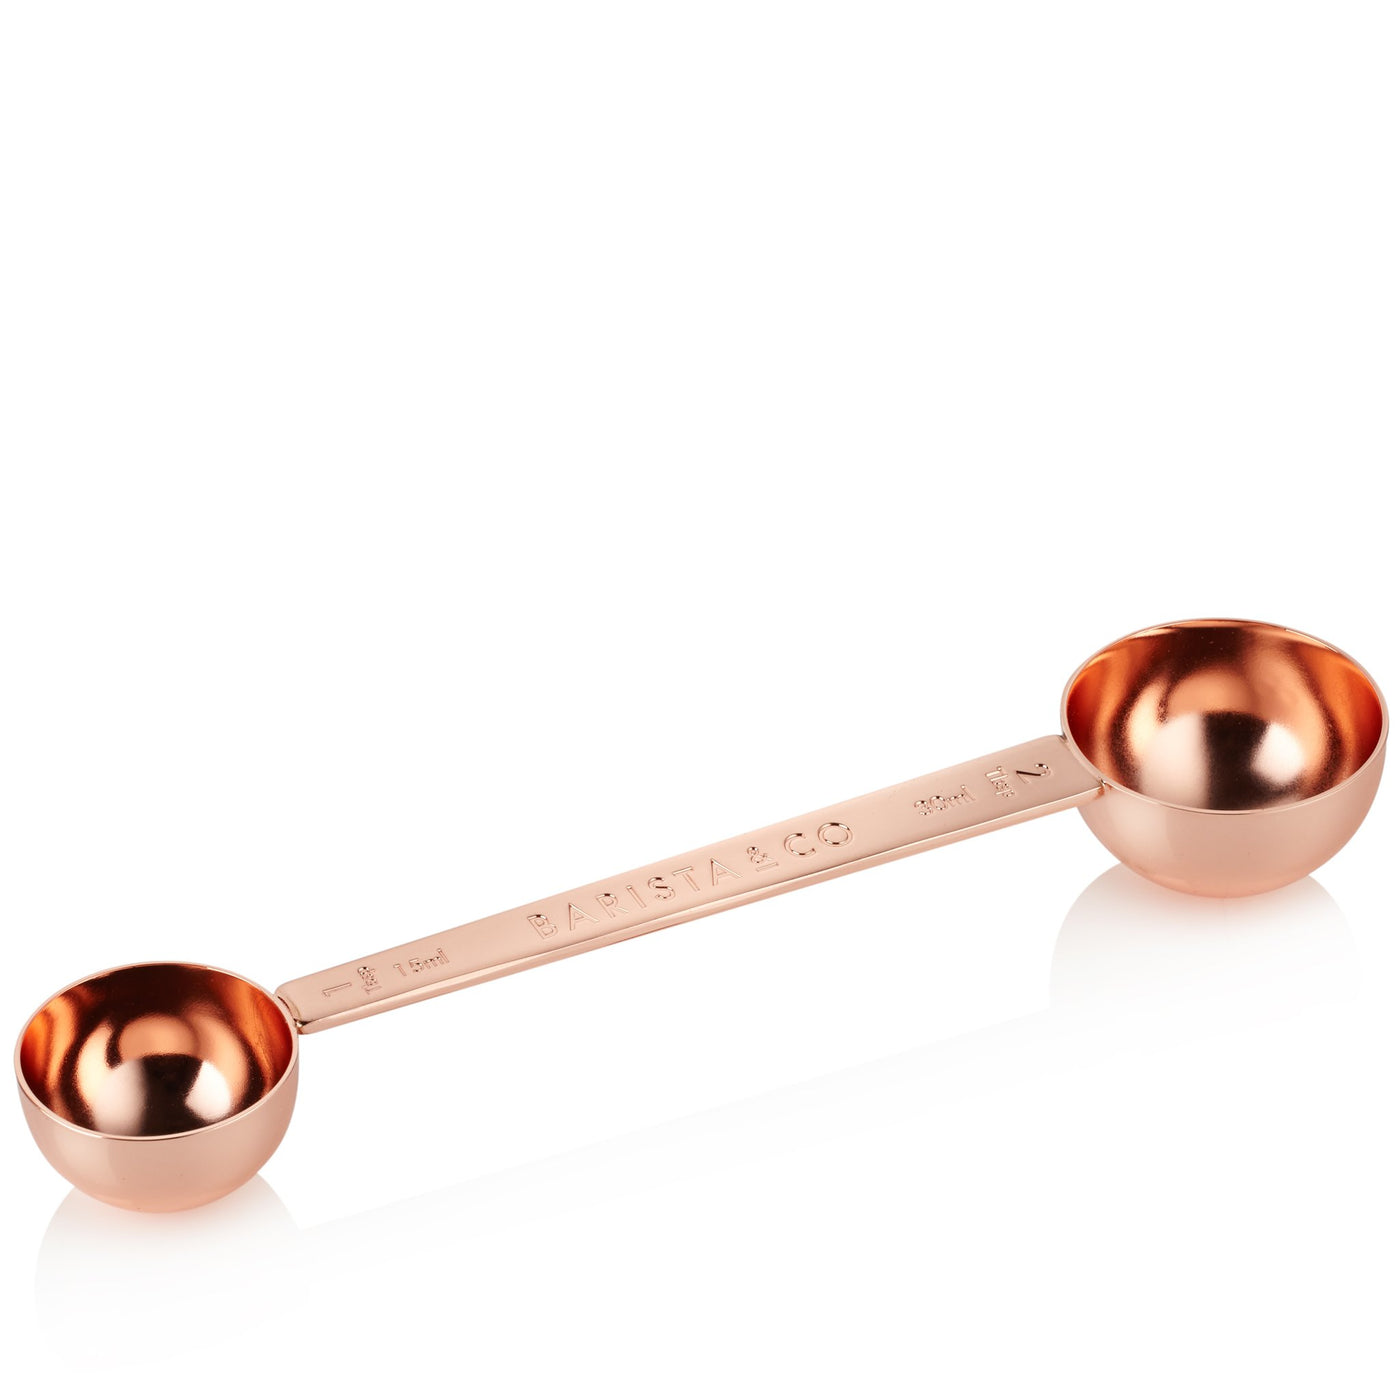 Copper coffee measuring spoon by Barista & Co